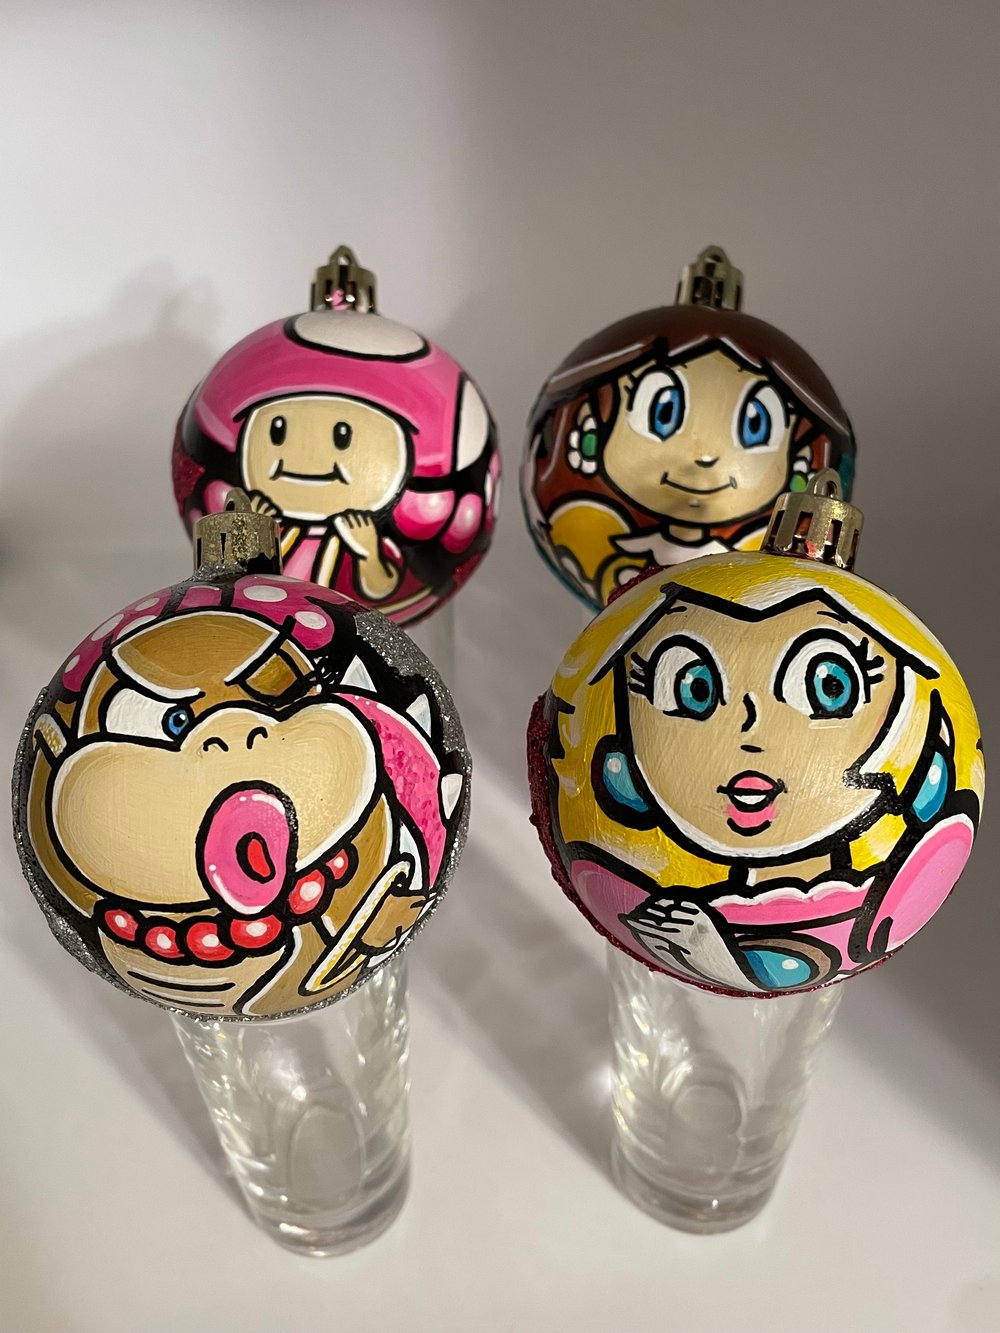 Mario Bro inspired ornaments 